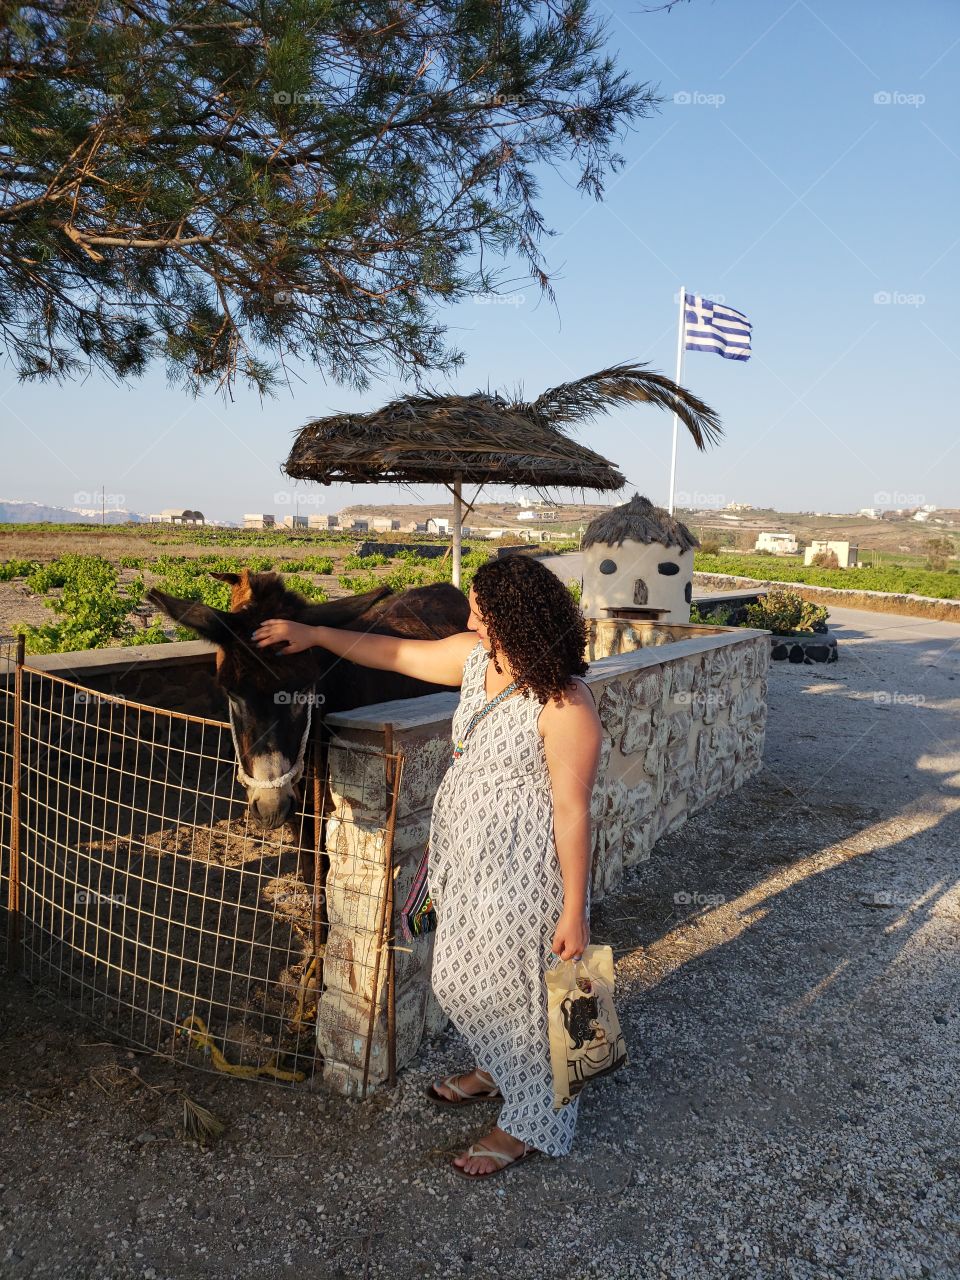 Petting a goat in Santorini, Greece